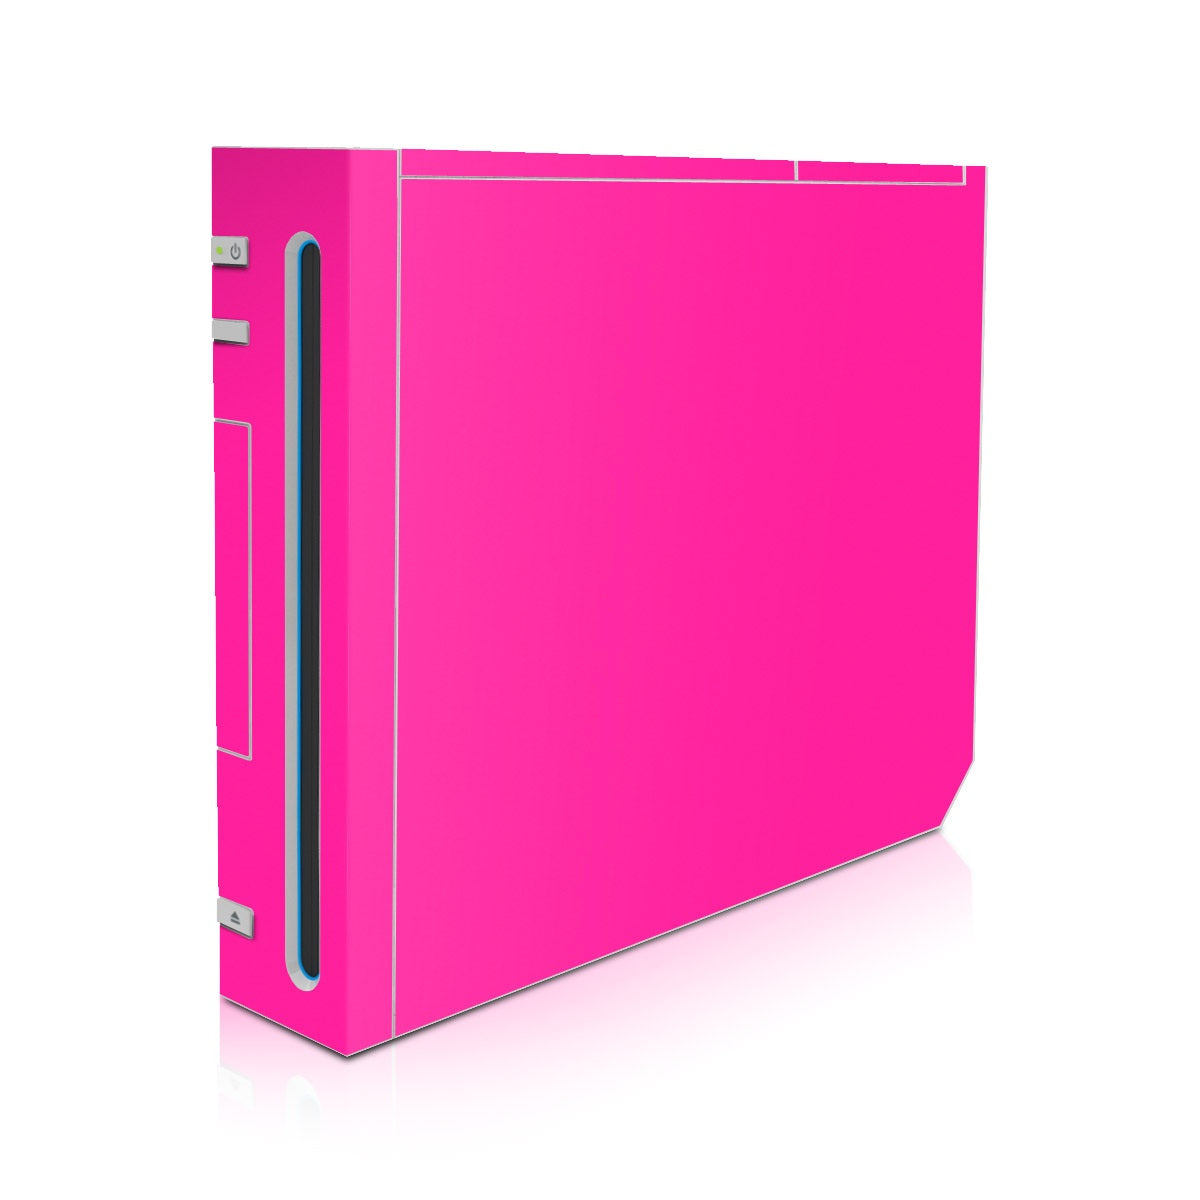 Solid State Malibu Pink - Nintendo Wii Skin